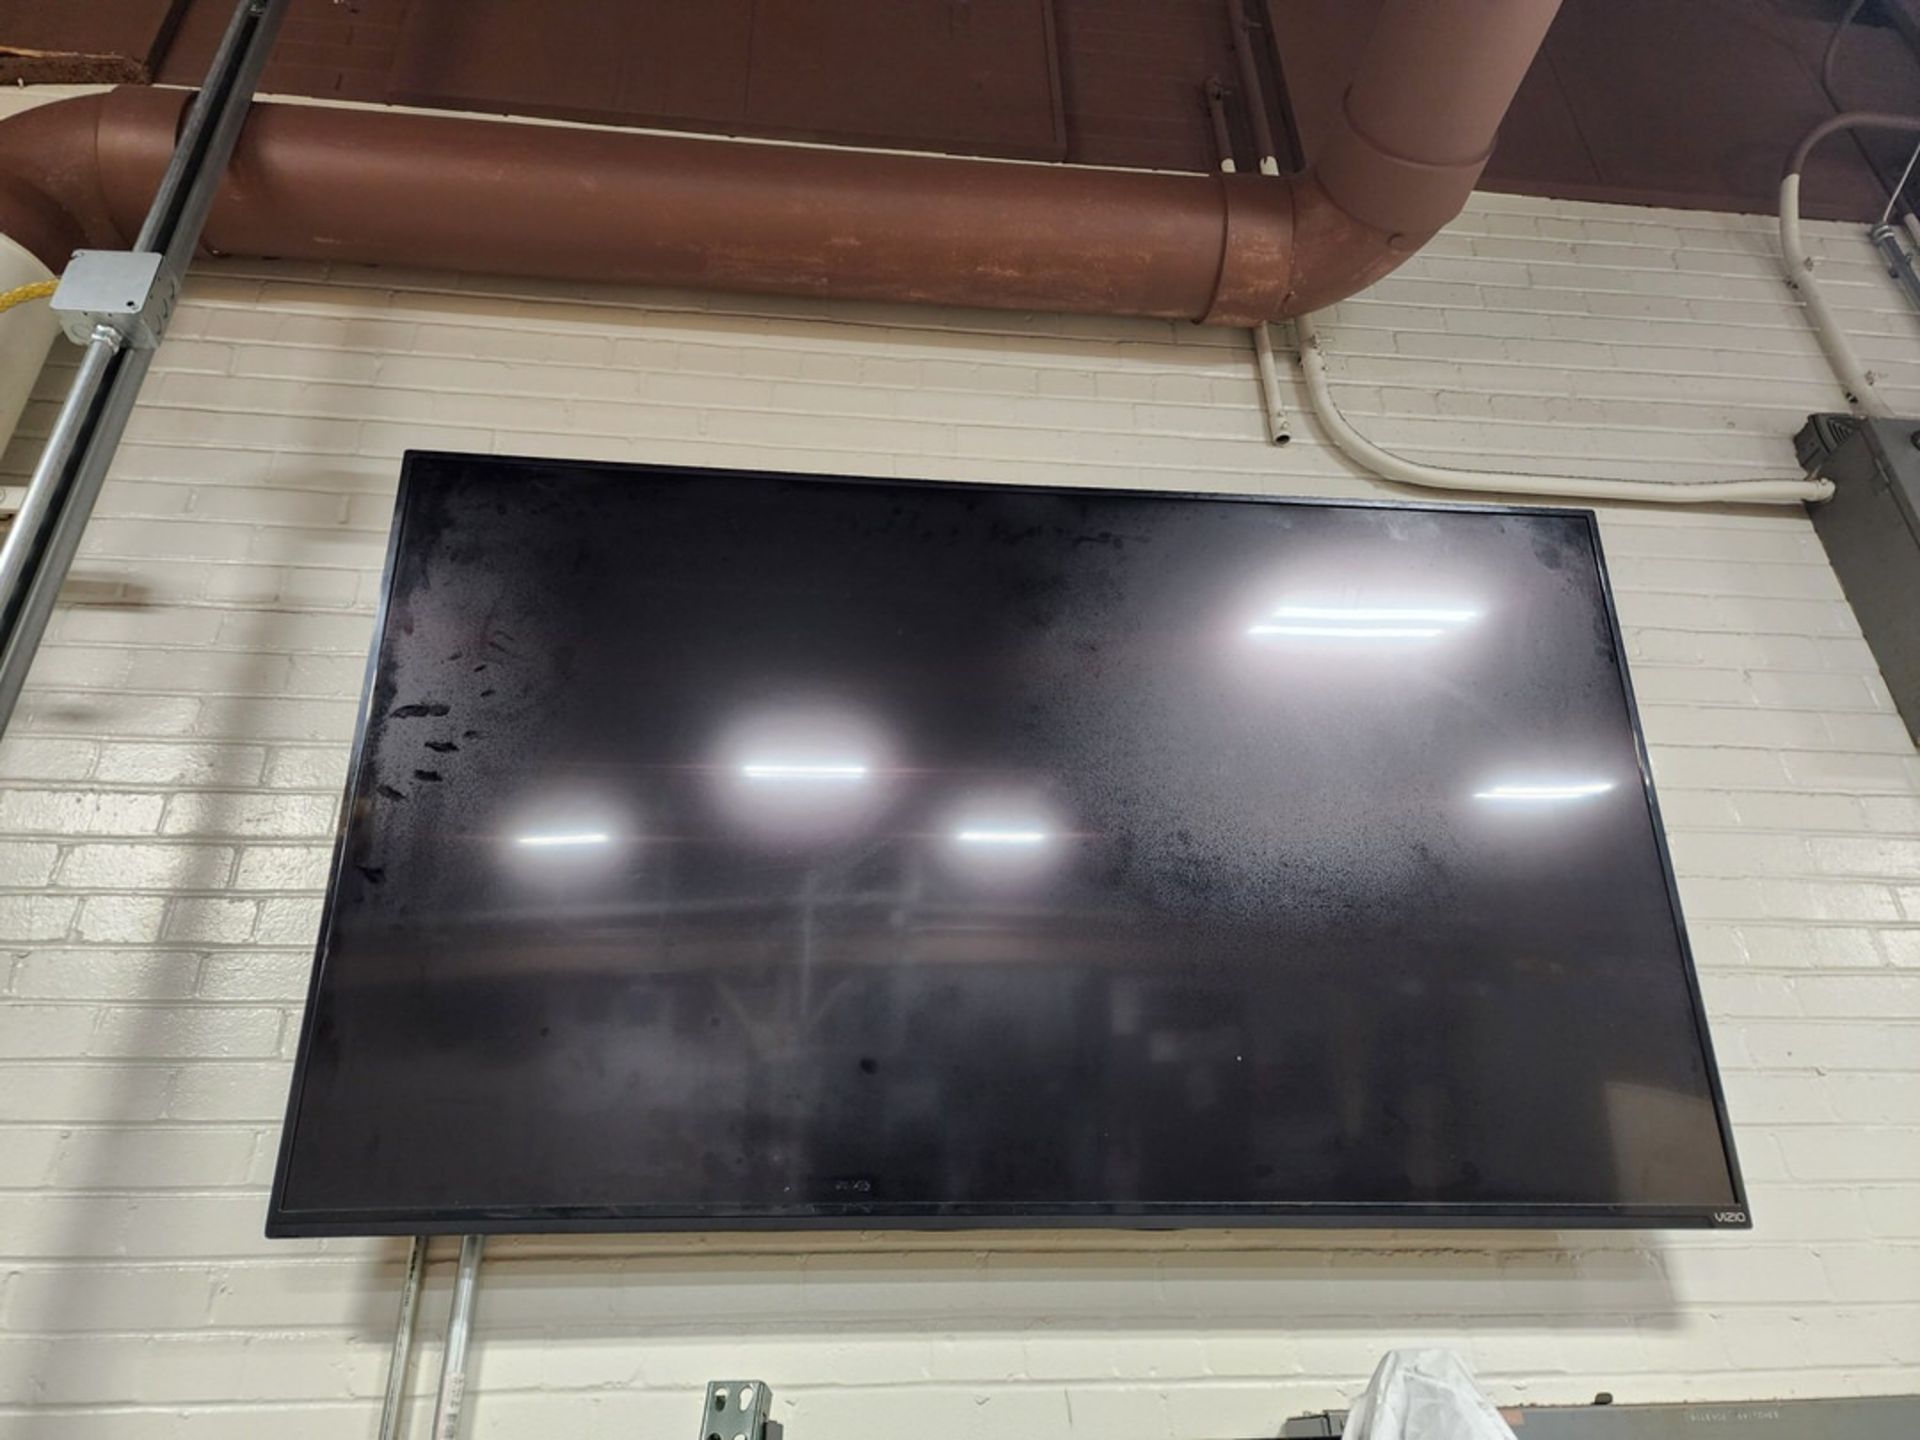 Vizio Flat Screen TV (Location: Chem Shop Area) - Image 2 of 4